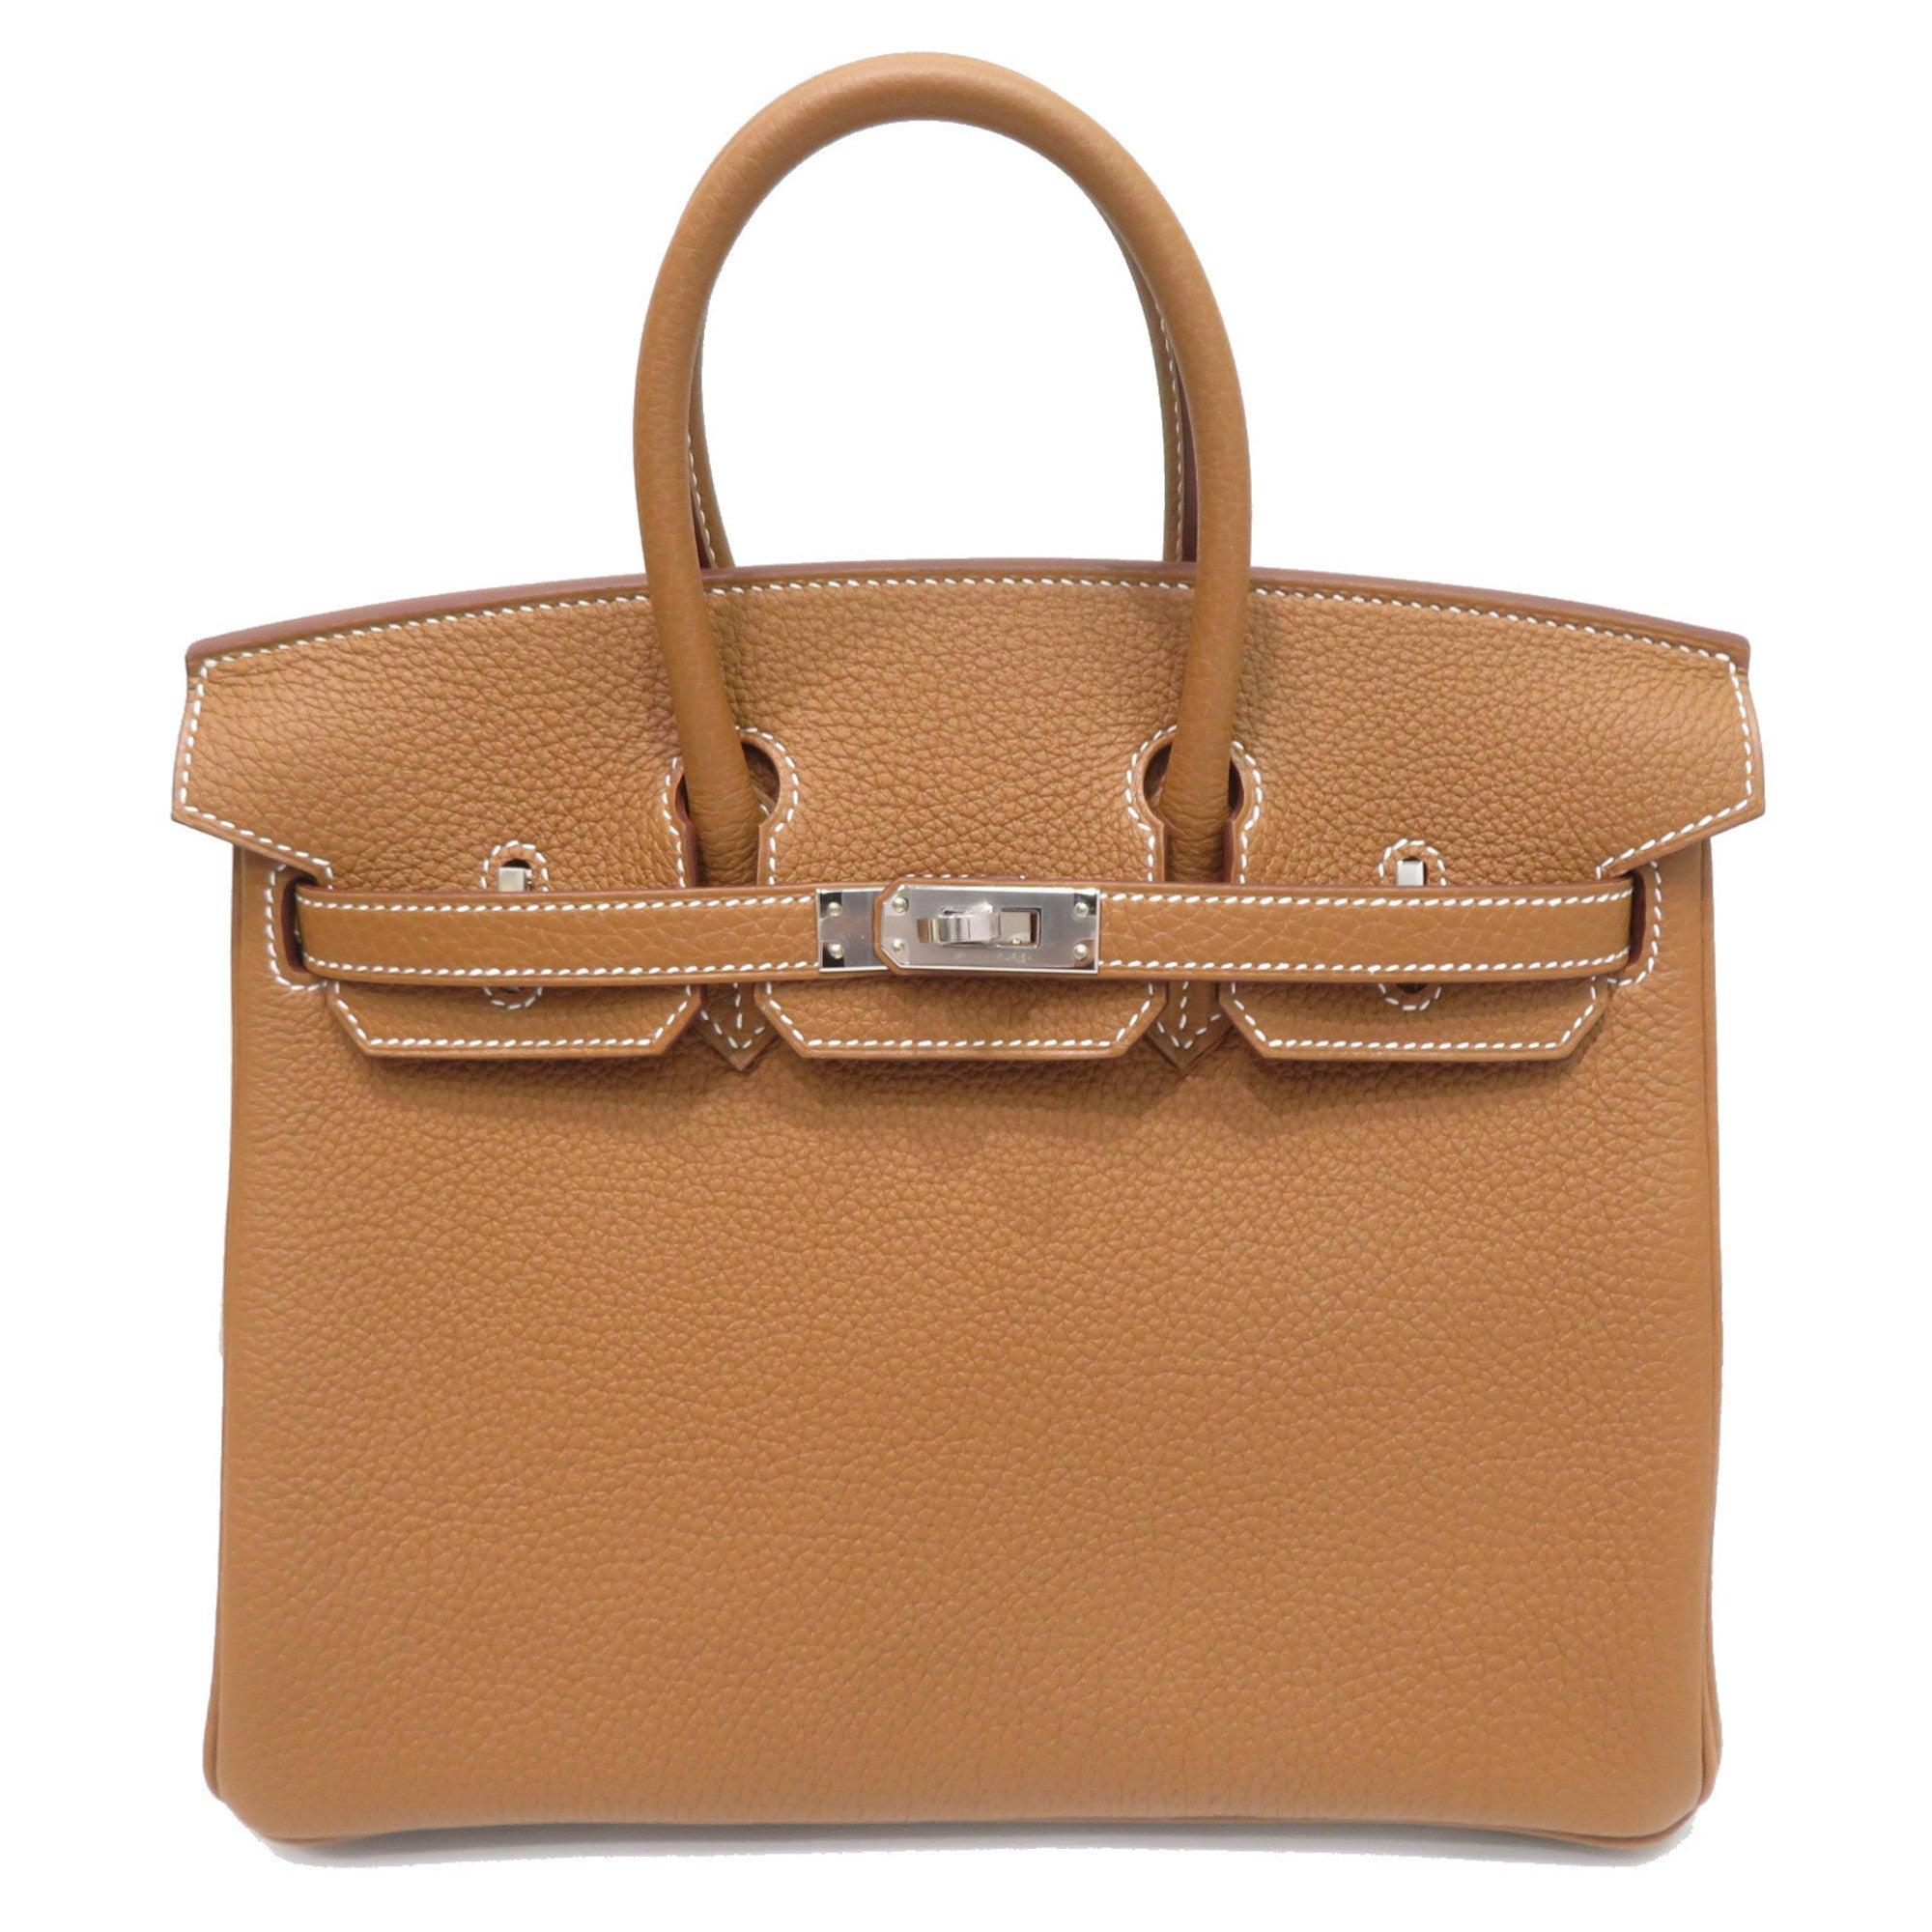 Birkin 25 Brown Leather Handbag